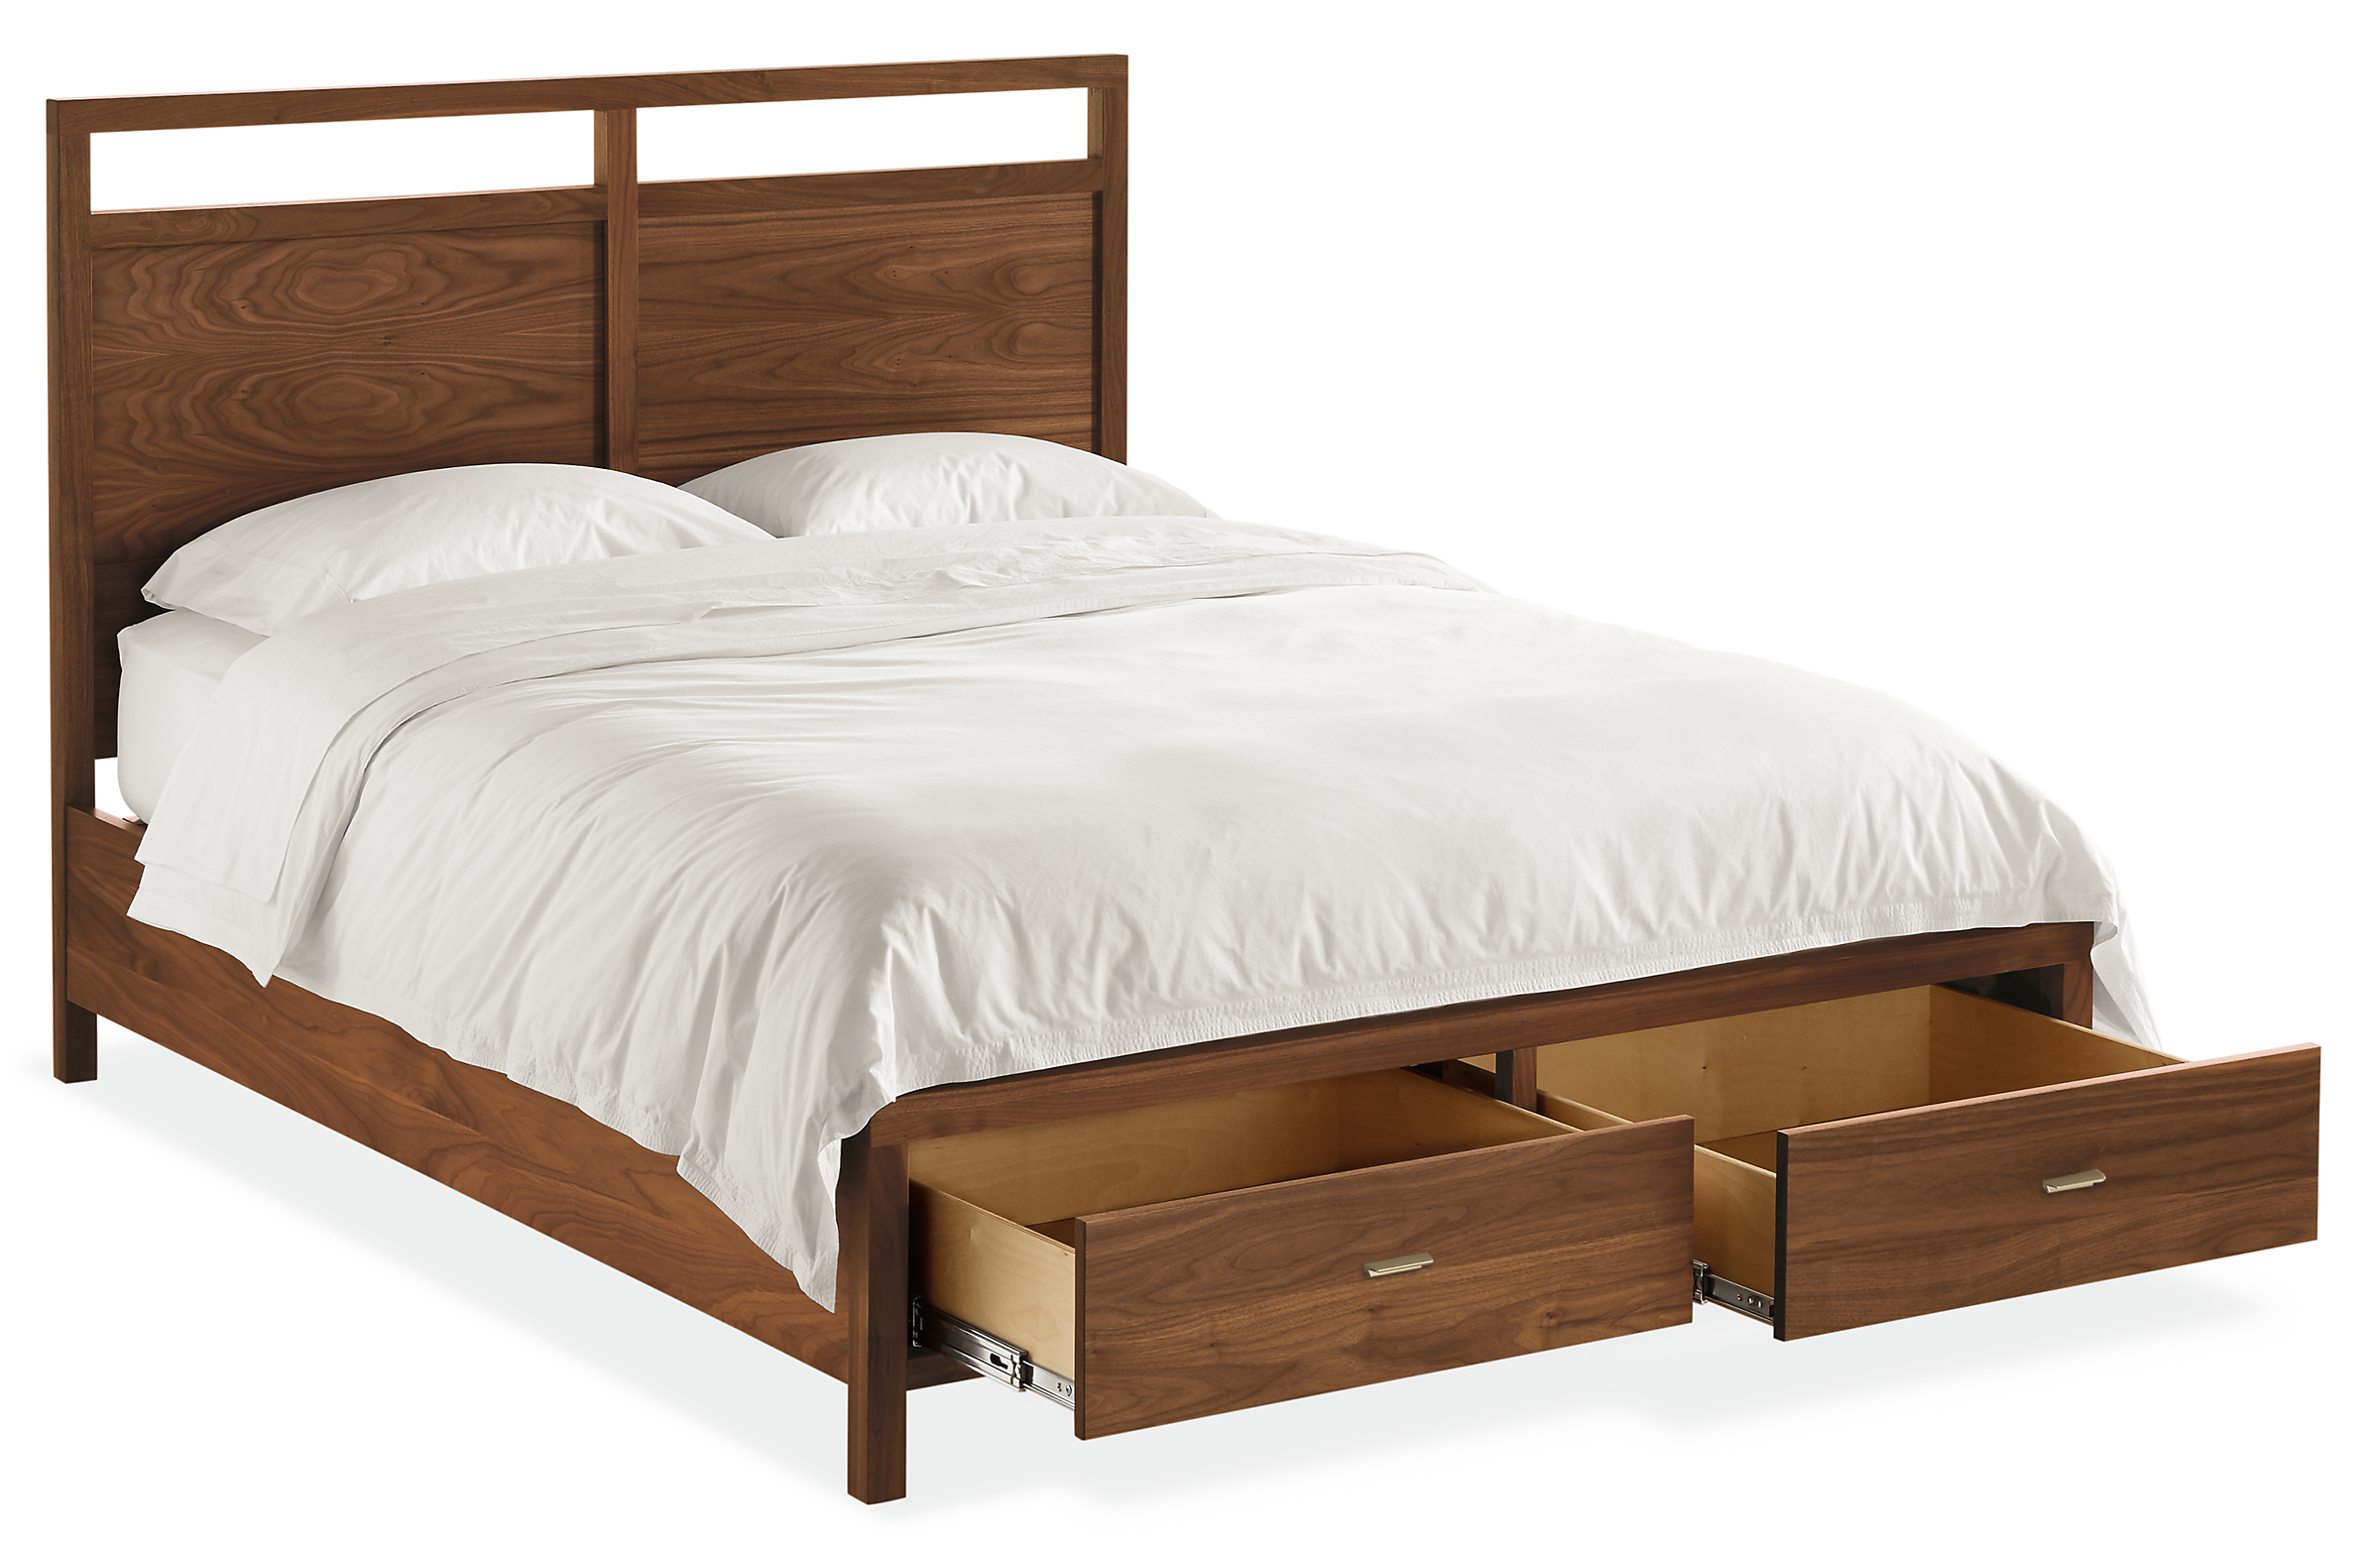 Berkeley Bed with Storage Drawers